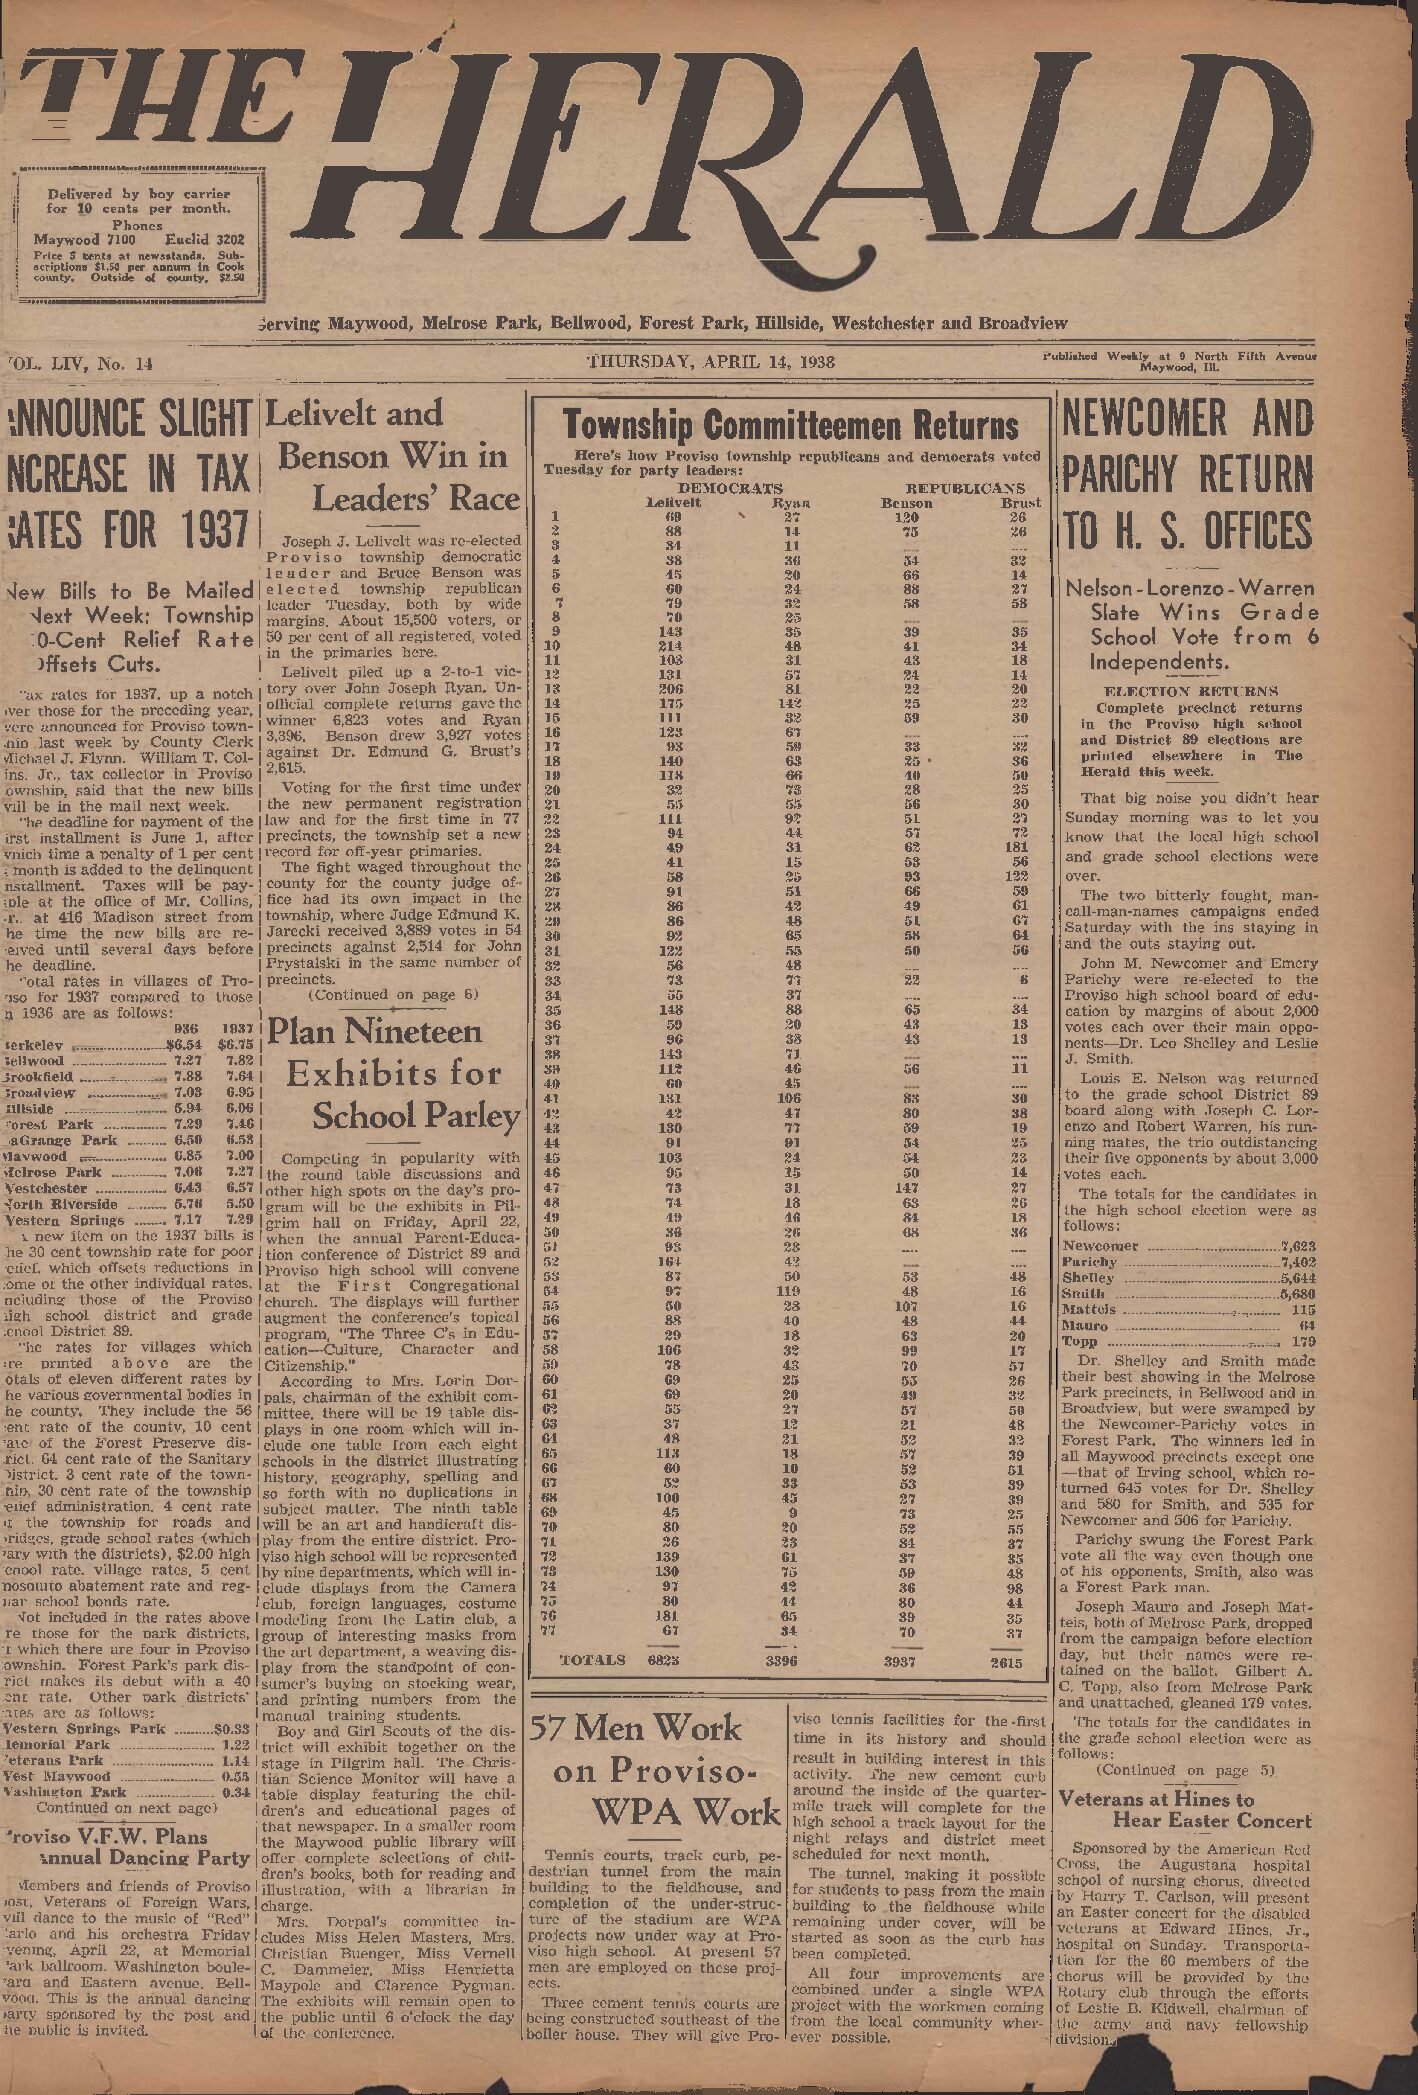 The Herald – 19380414